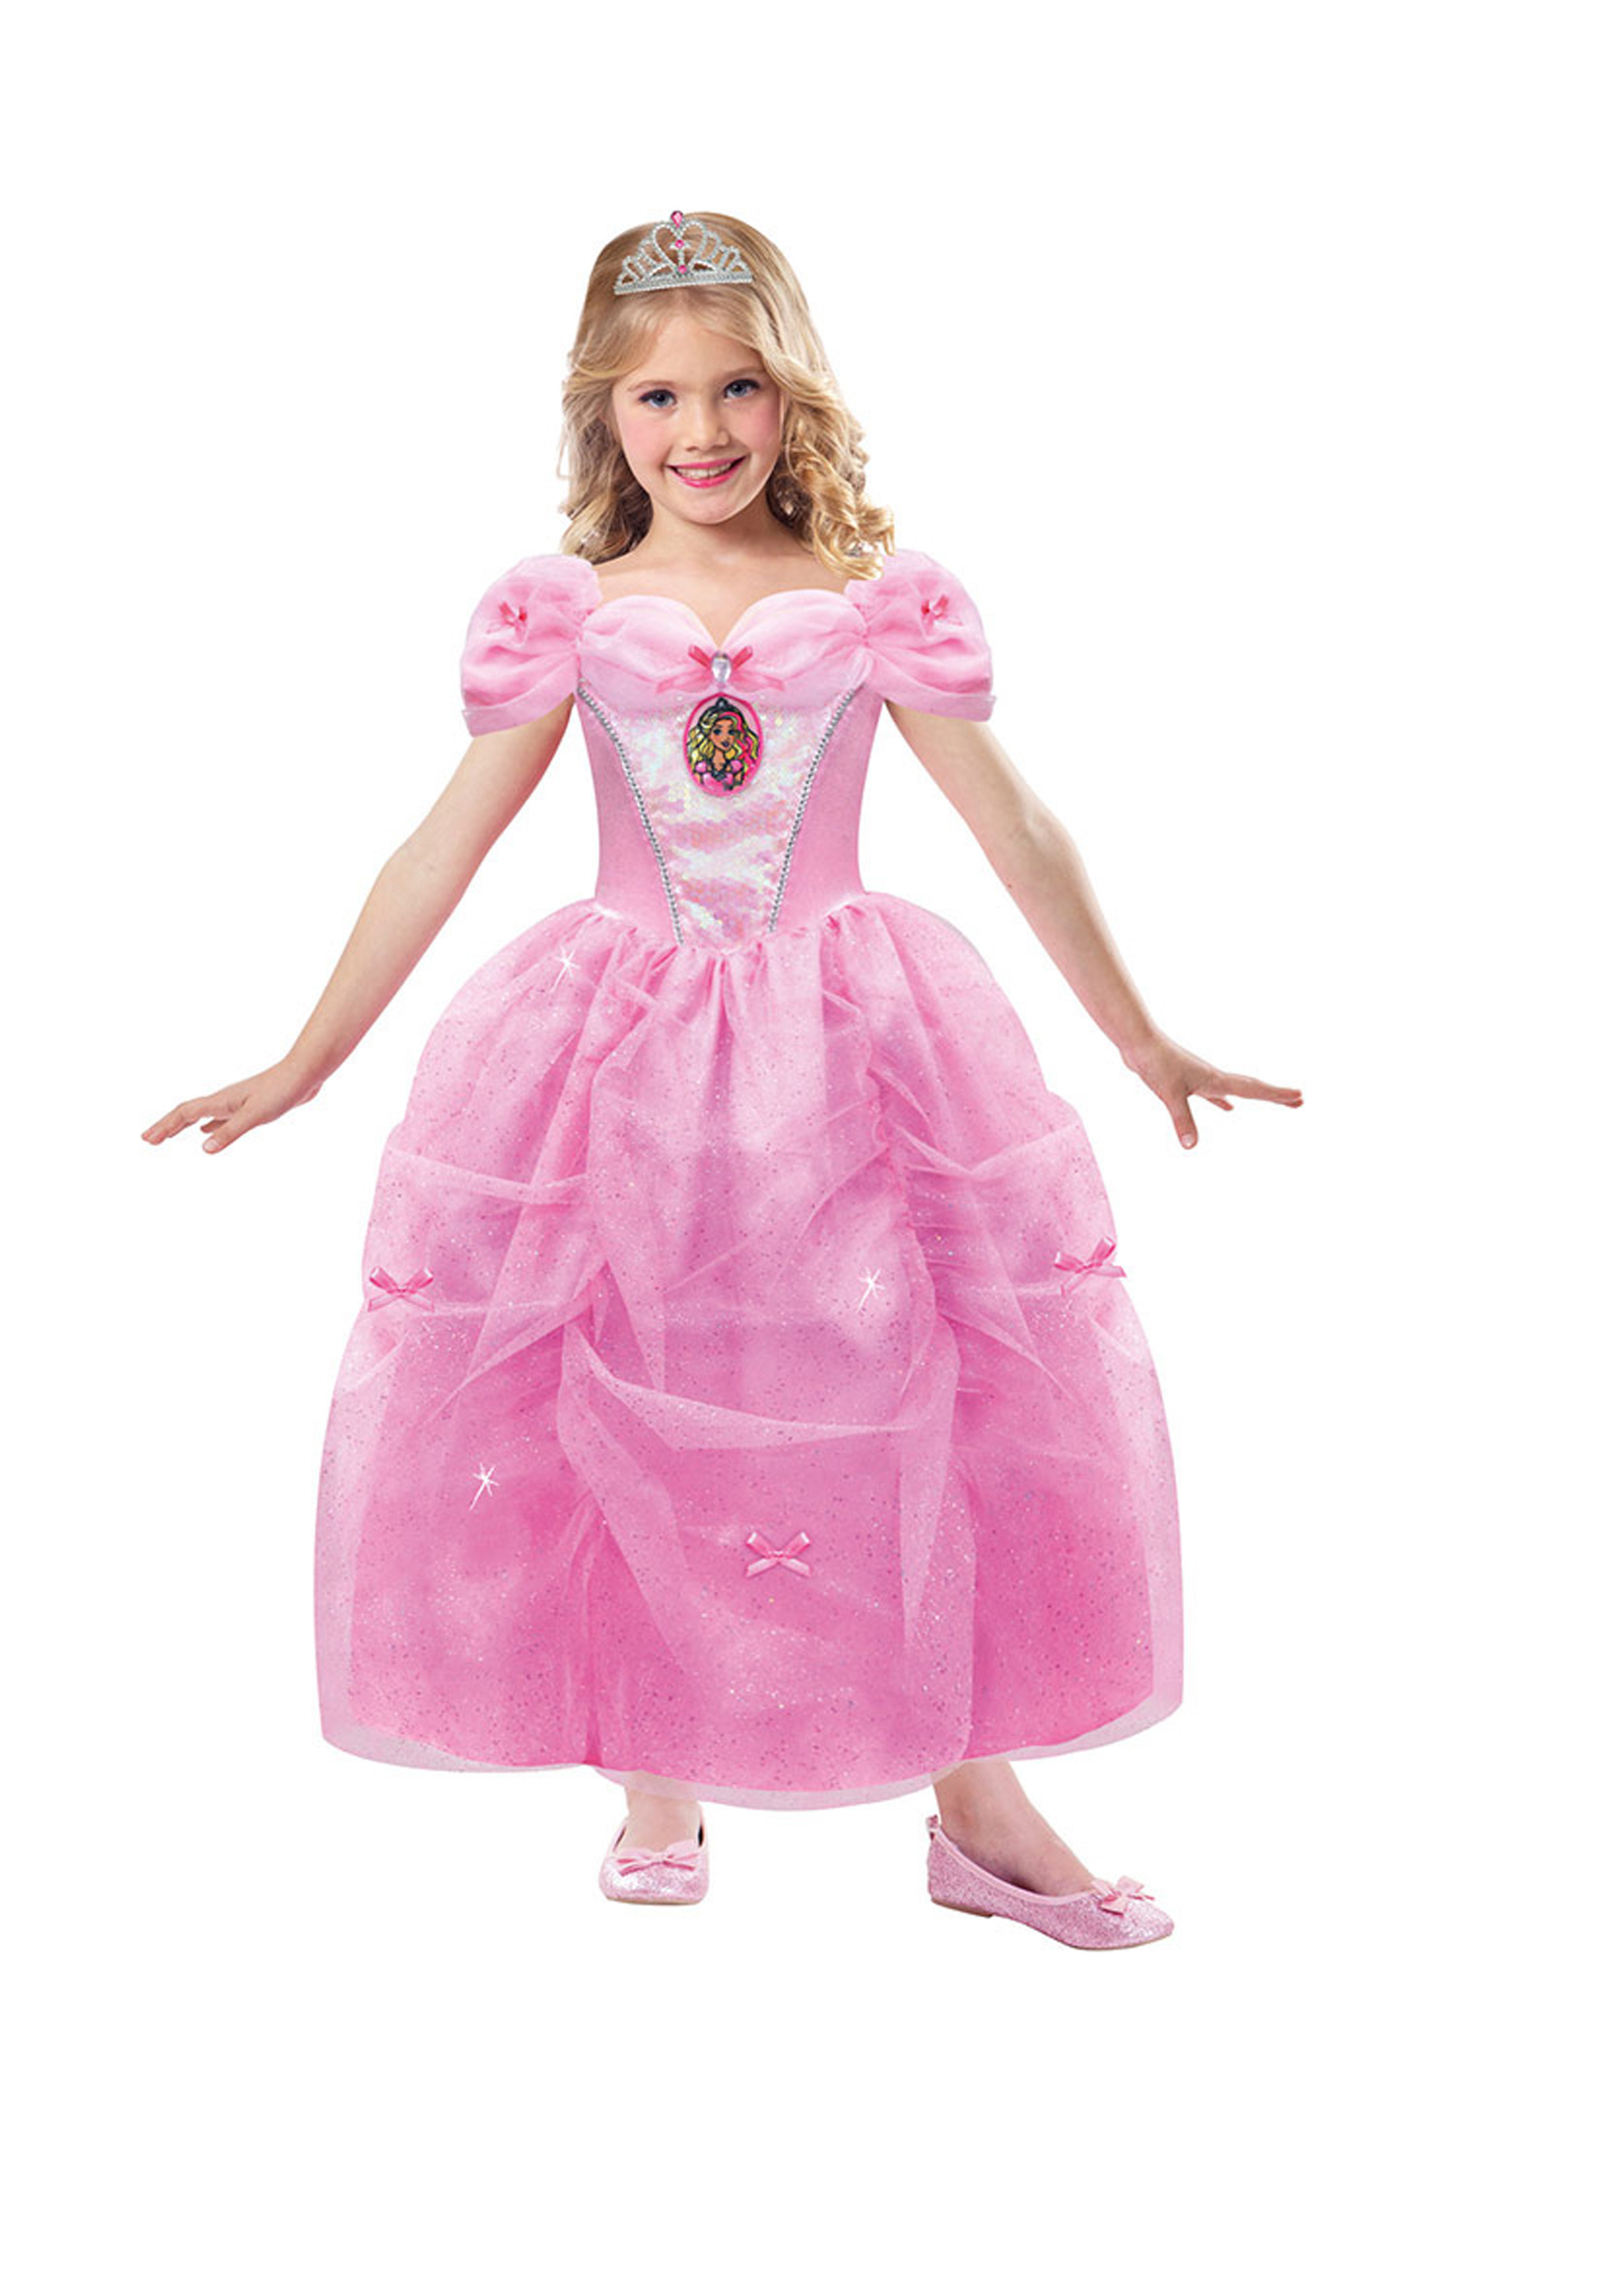 Ciao - Costume - Barbie Pink Princess (120 cm) (J00081)